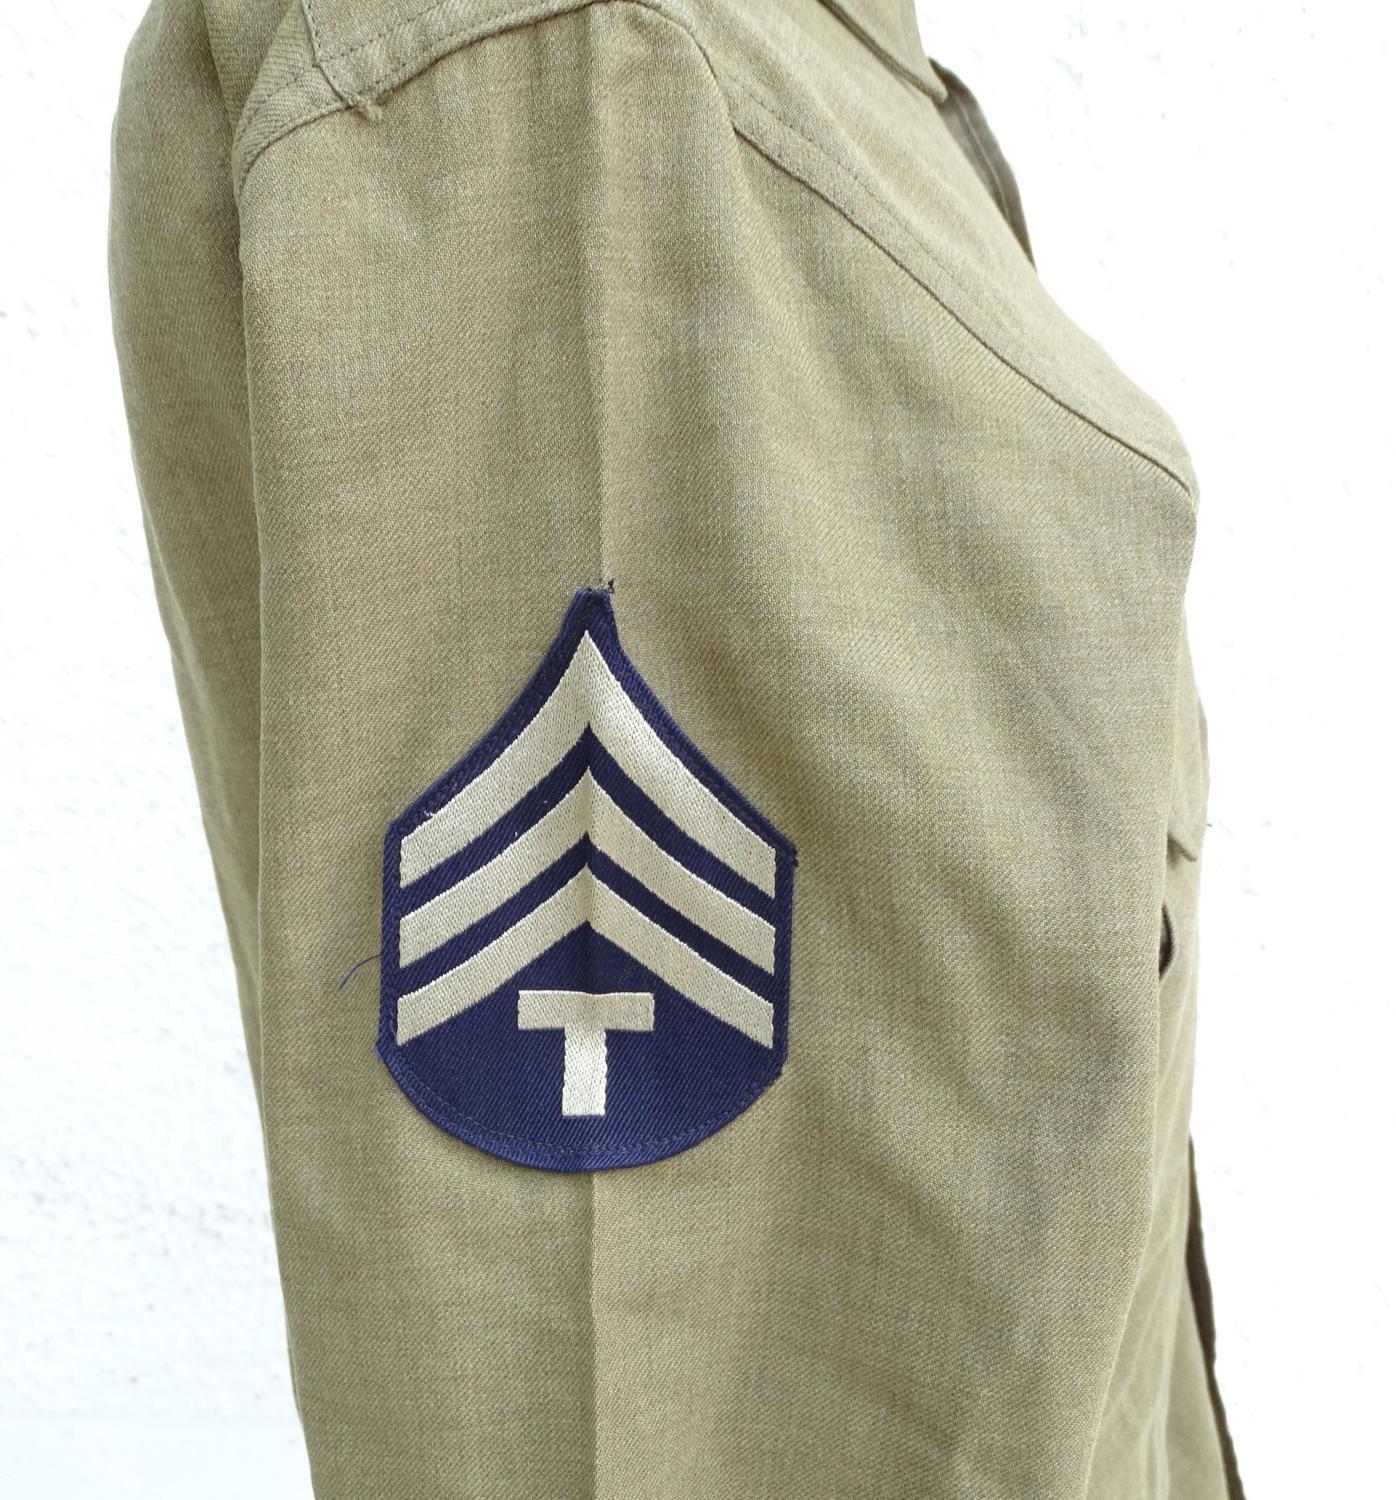 Shirt flannel OD. Technician 4th grade  Eastern Defense Command